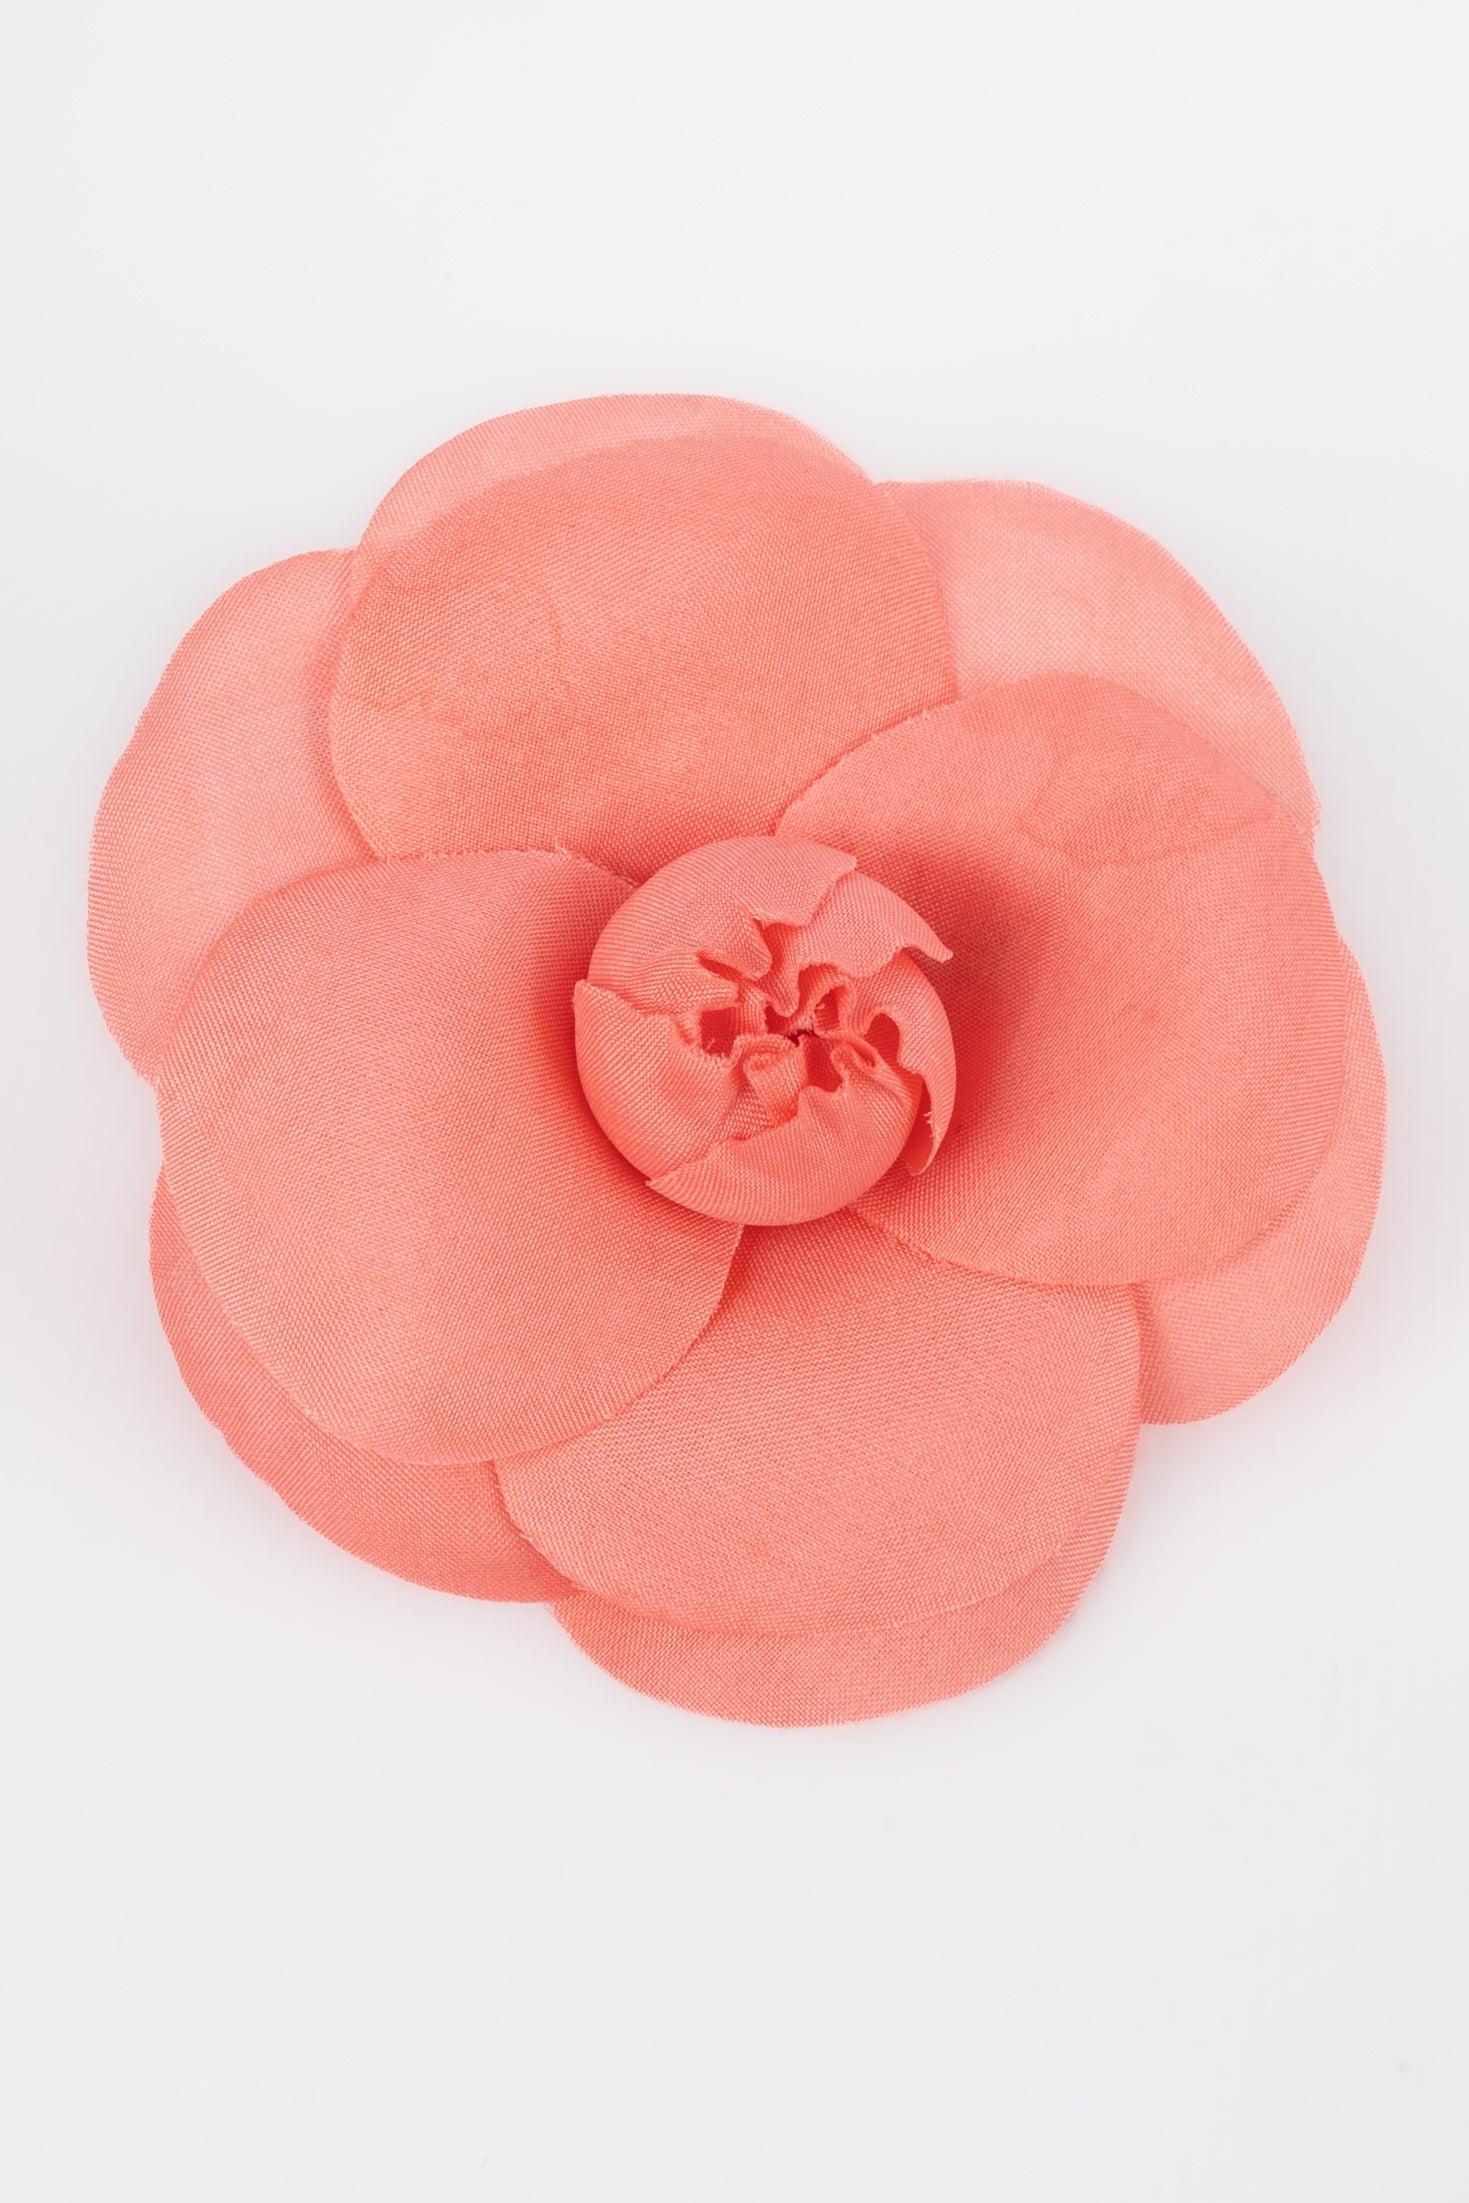 chanel camellia brooch